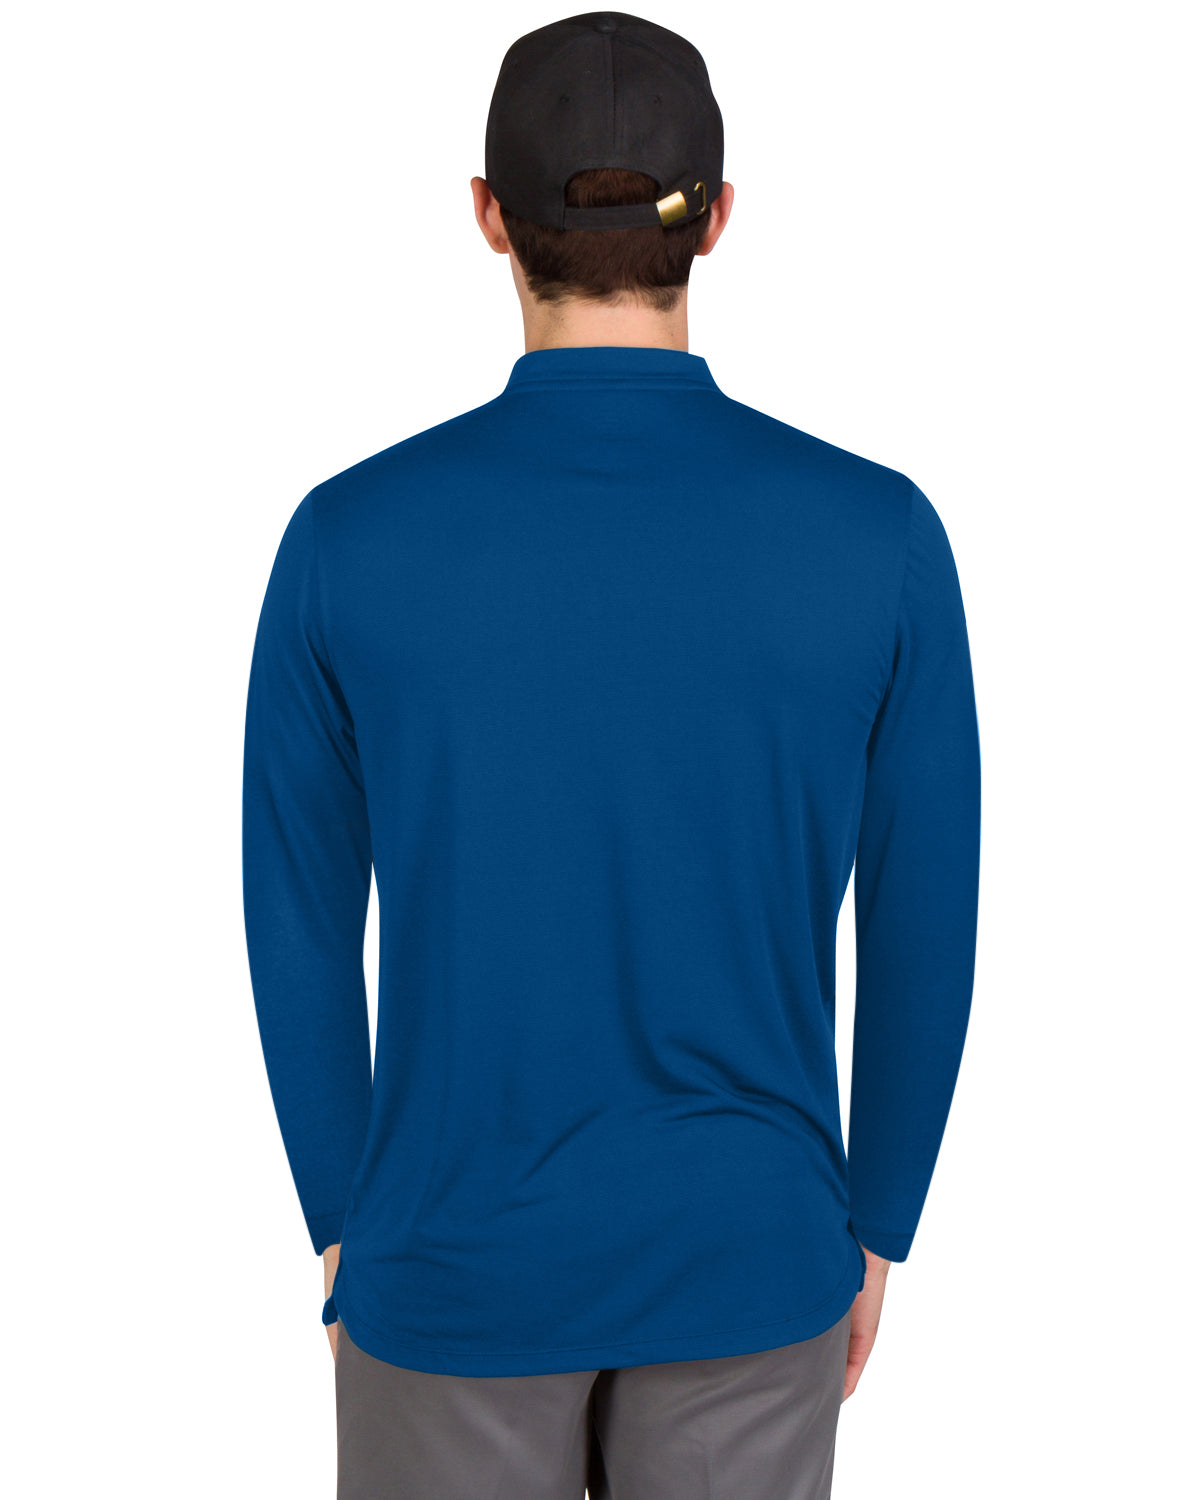 Men’s Solid Long Sleeve Collarless Golf Shirt, S / Navy